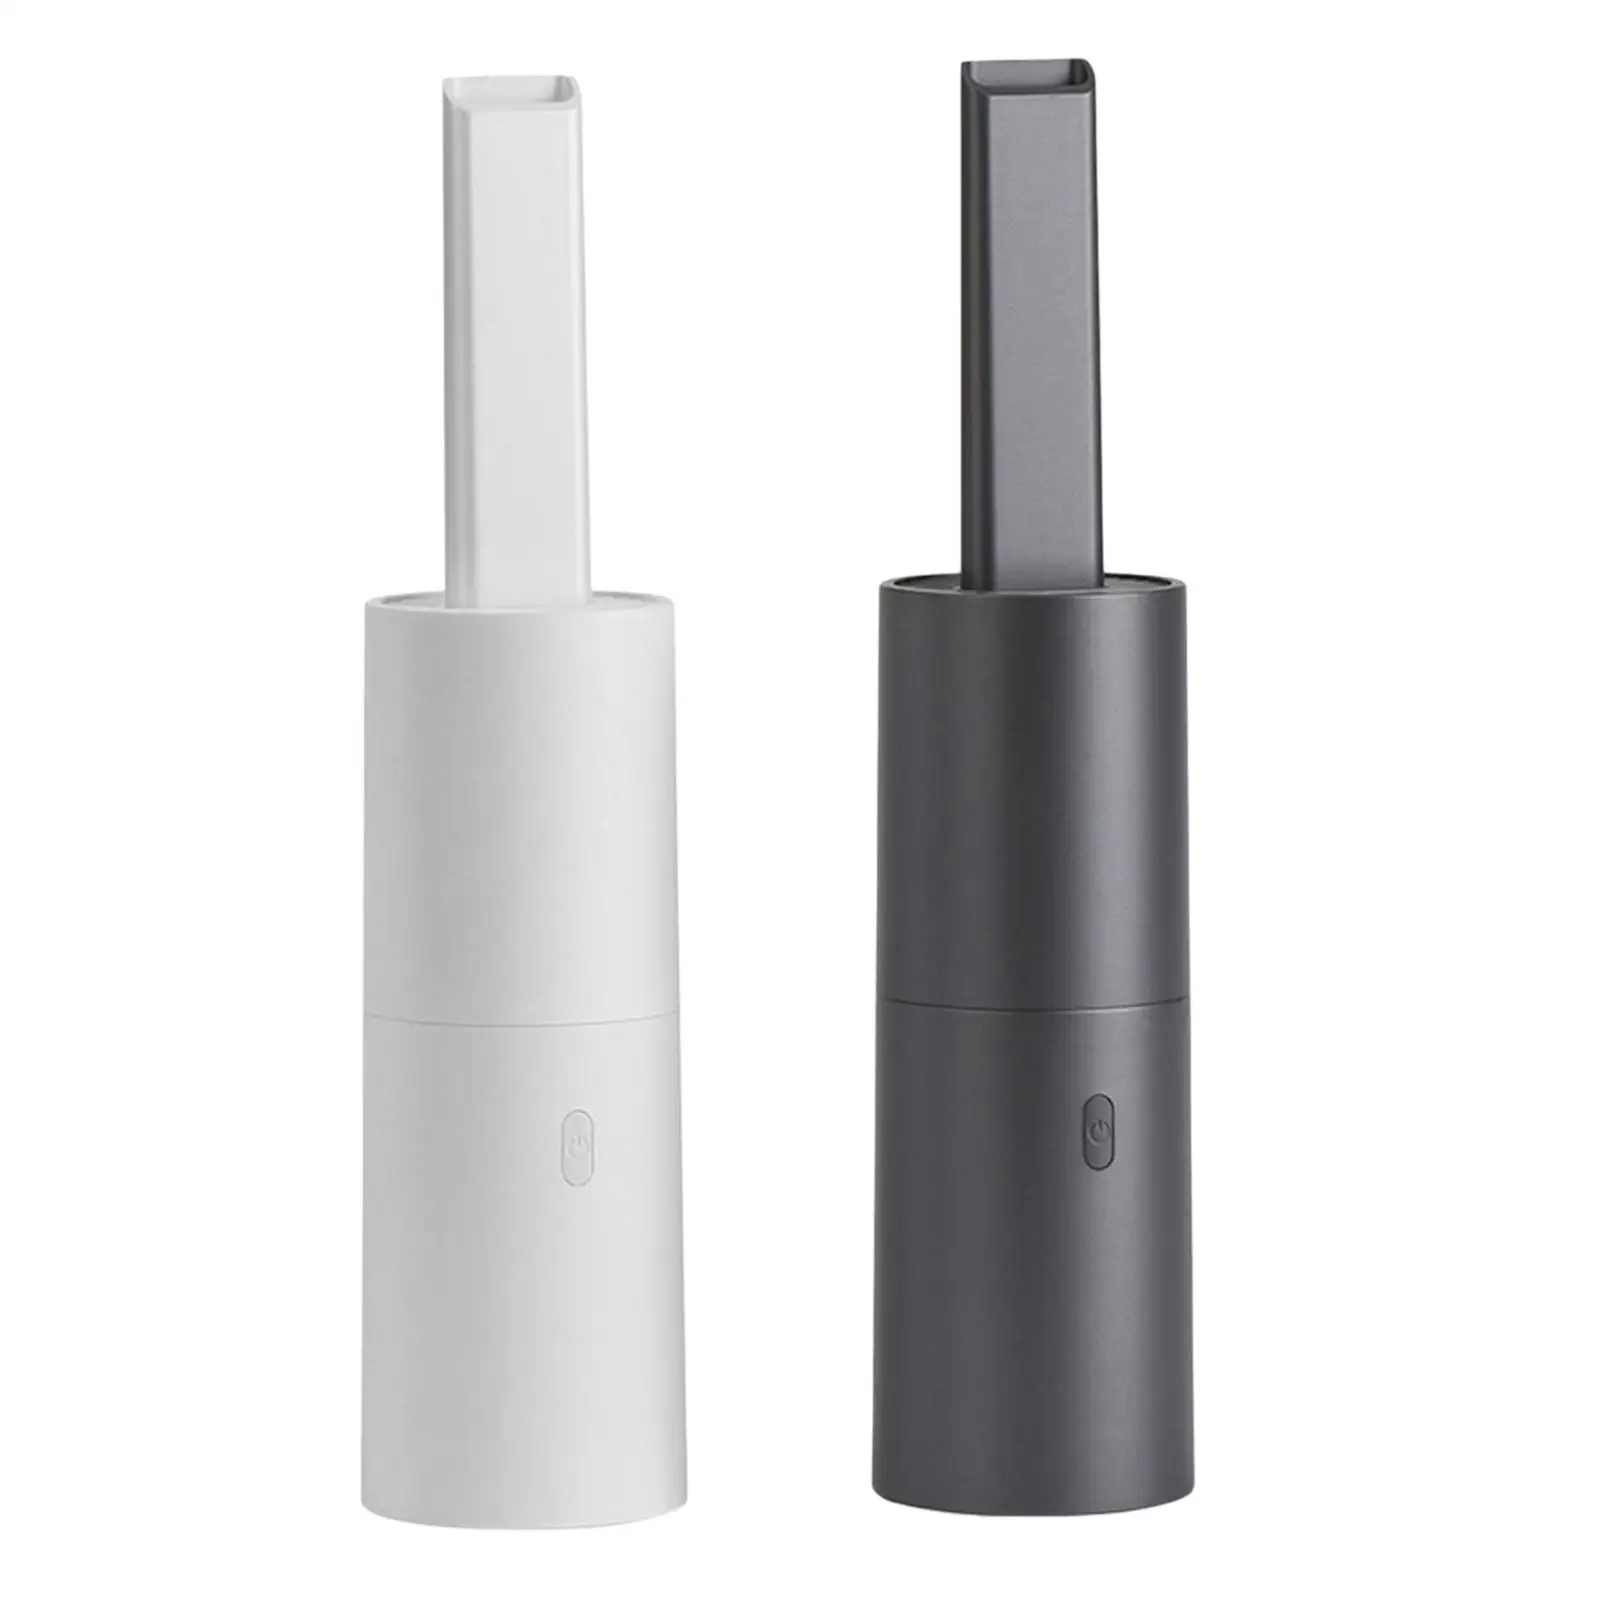 Handheld Vacuum Cleaner USB Rechargeable Hand Pump for Office Home Desktop